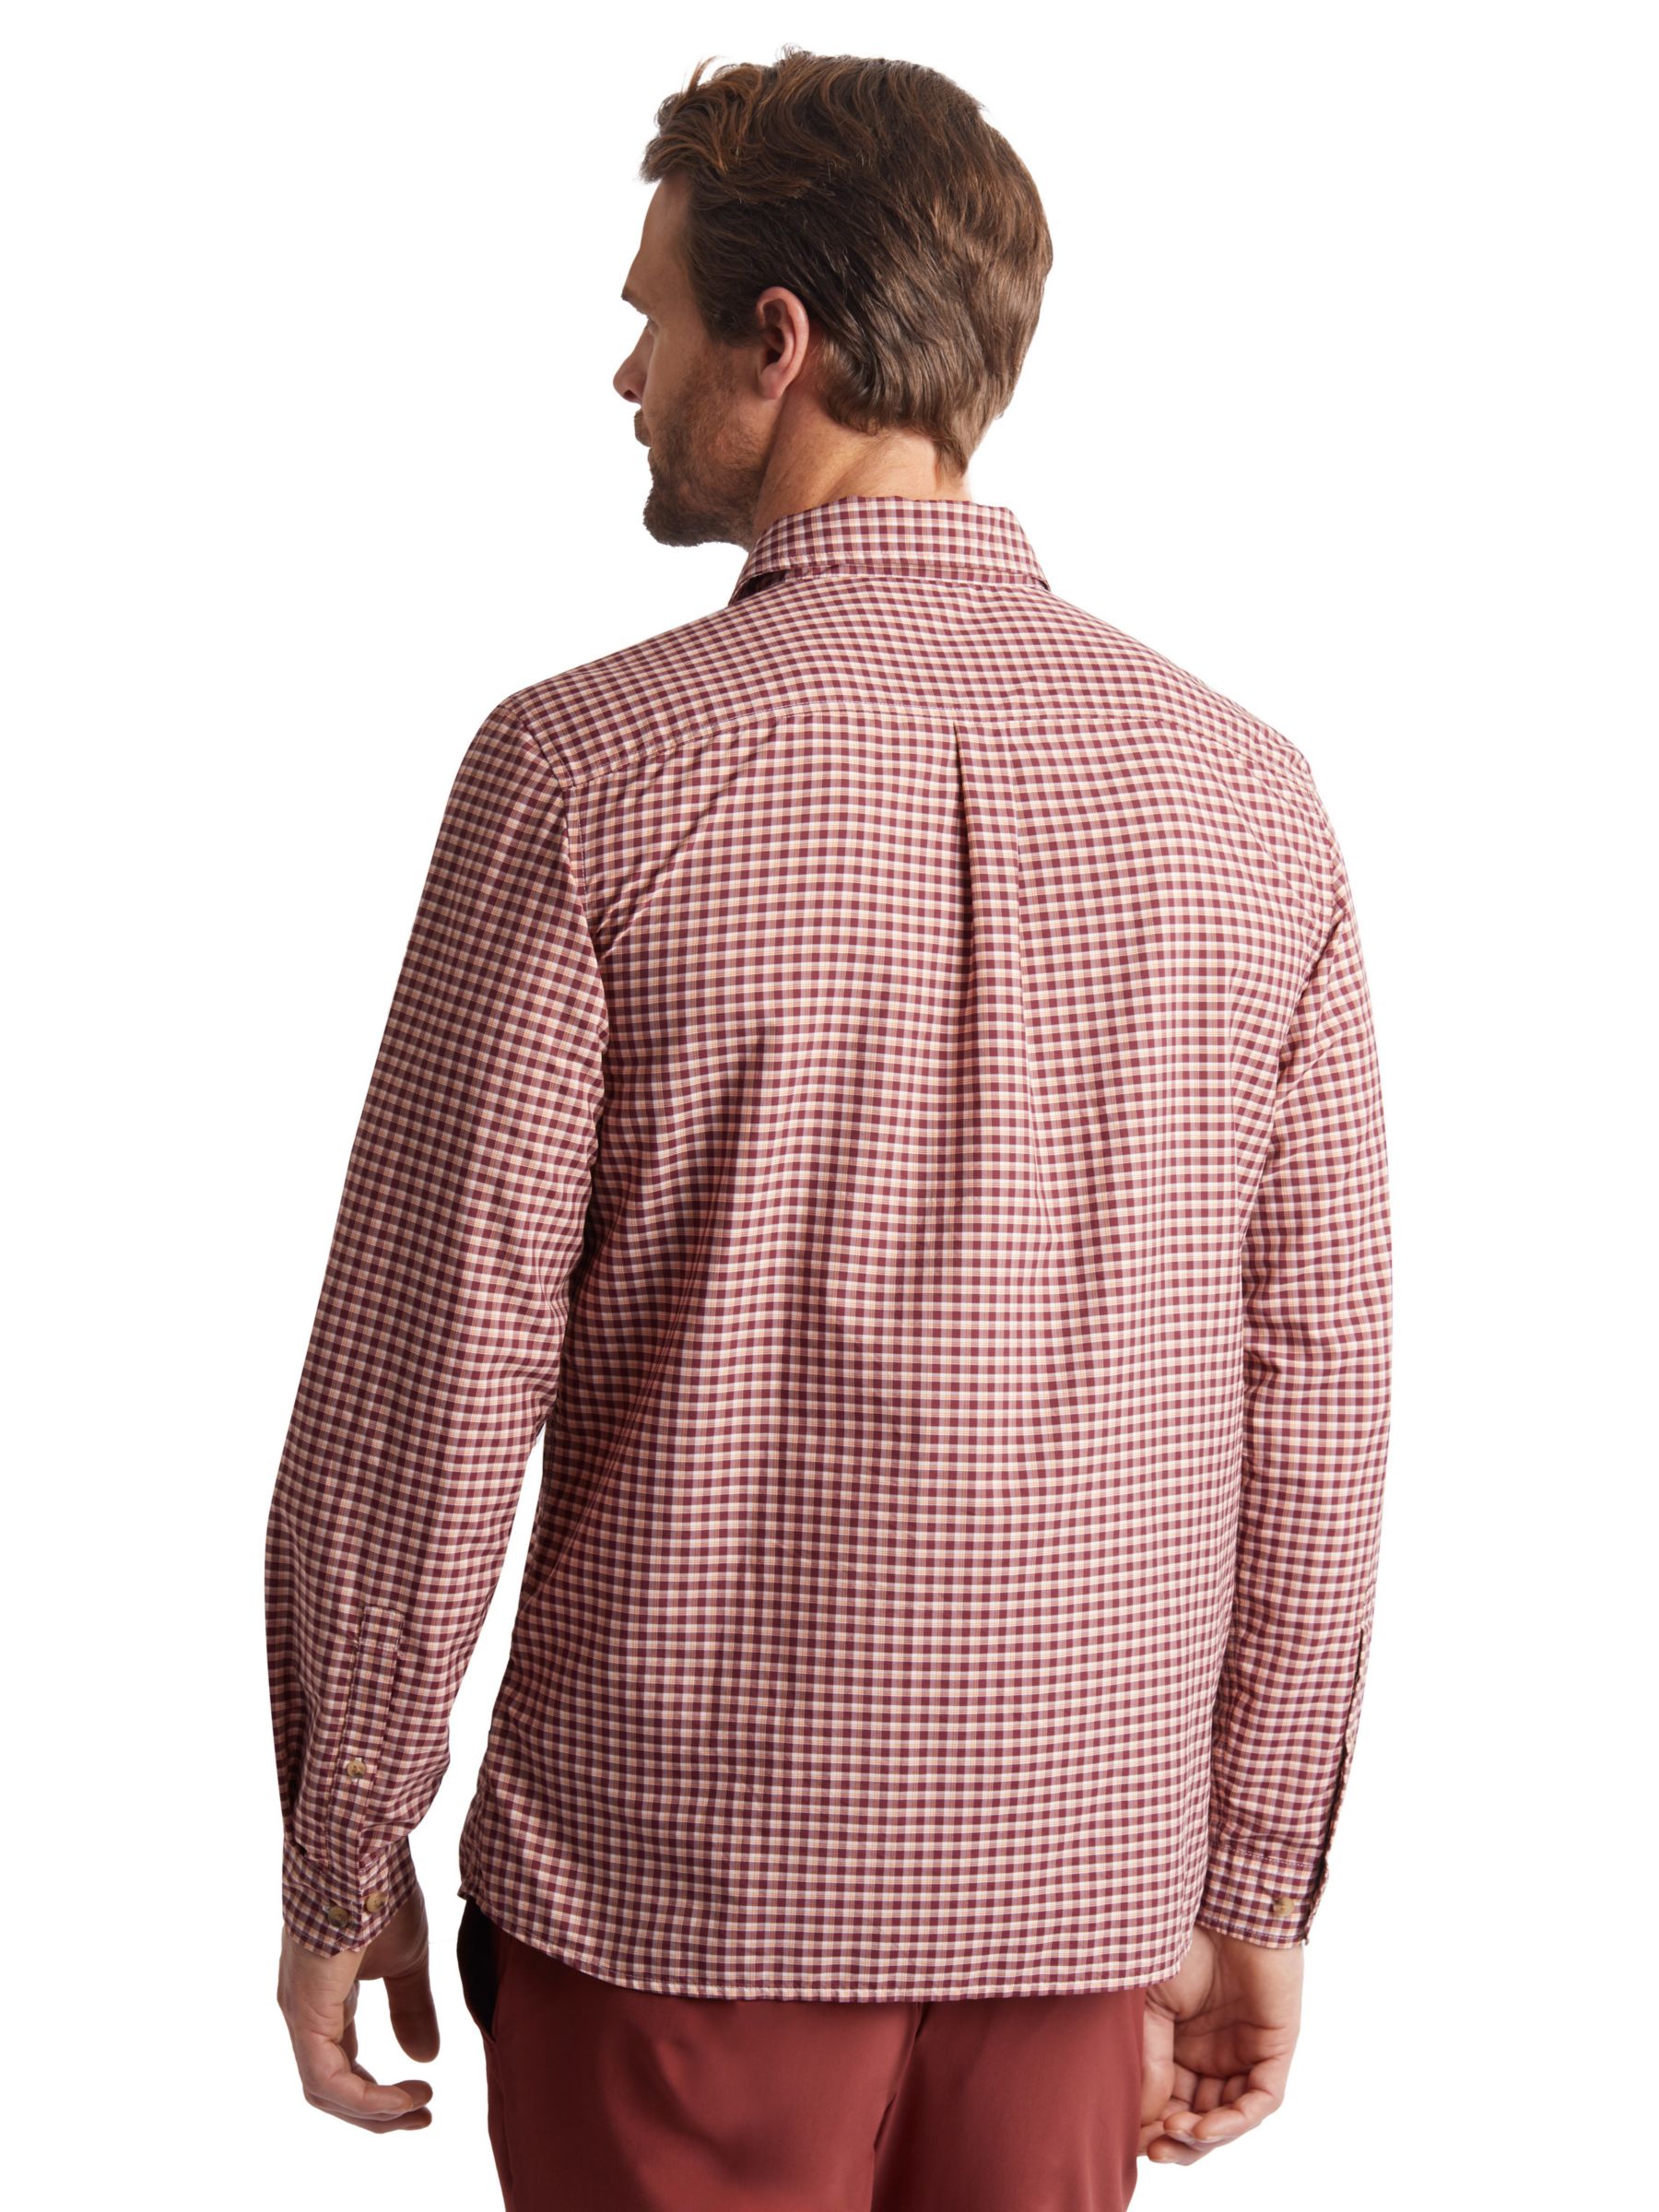 Buy Rohan Firth Long Sleeve Gingham Shirt Online at johnlewis.com